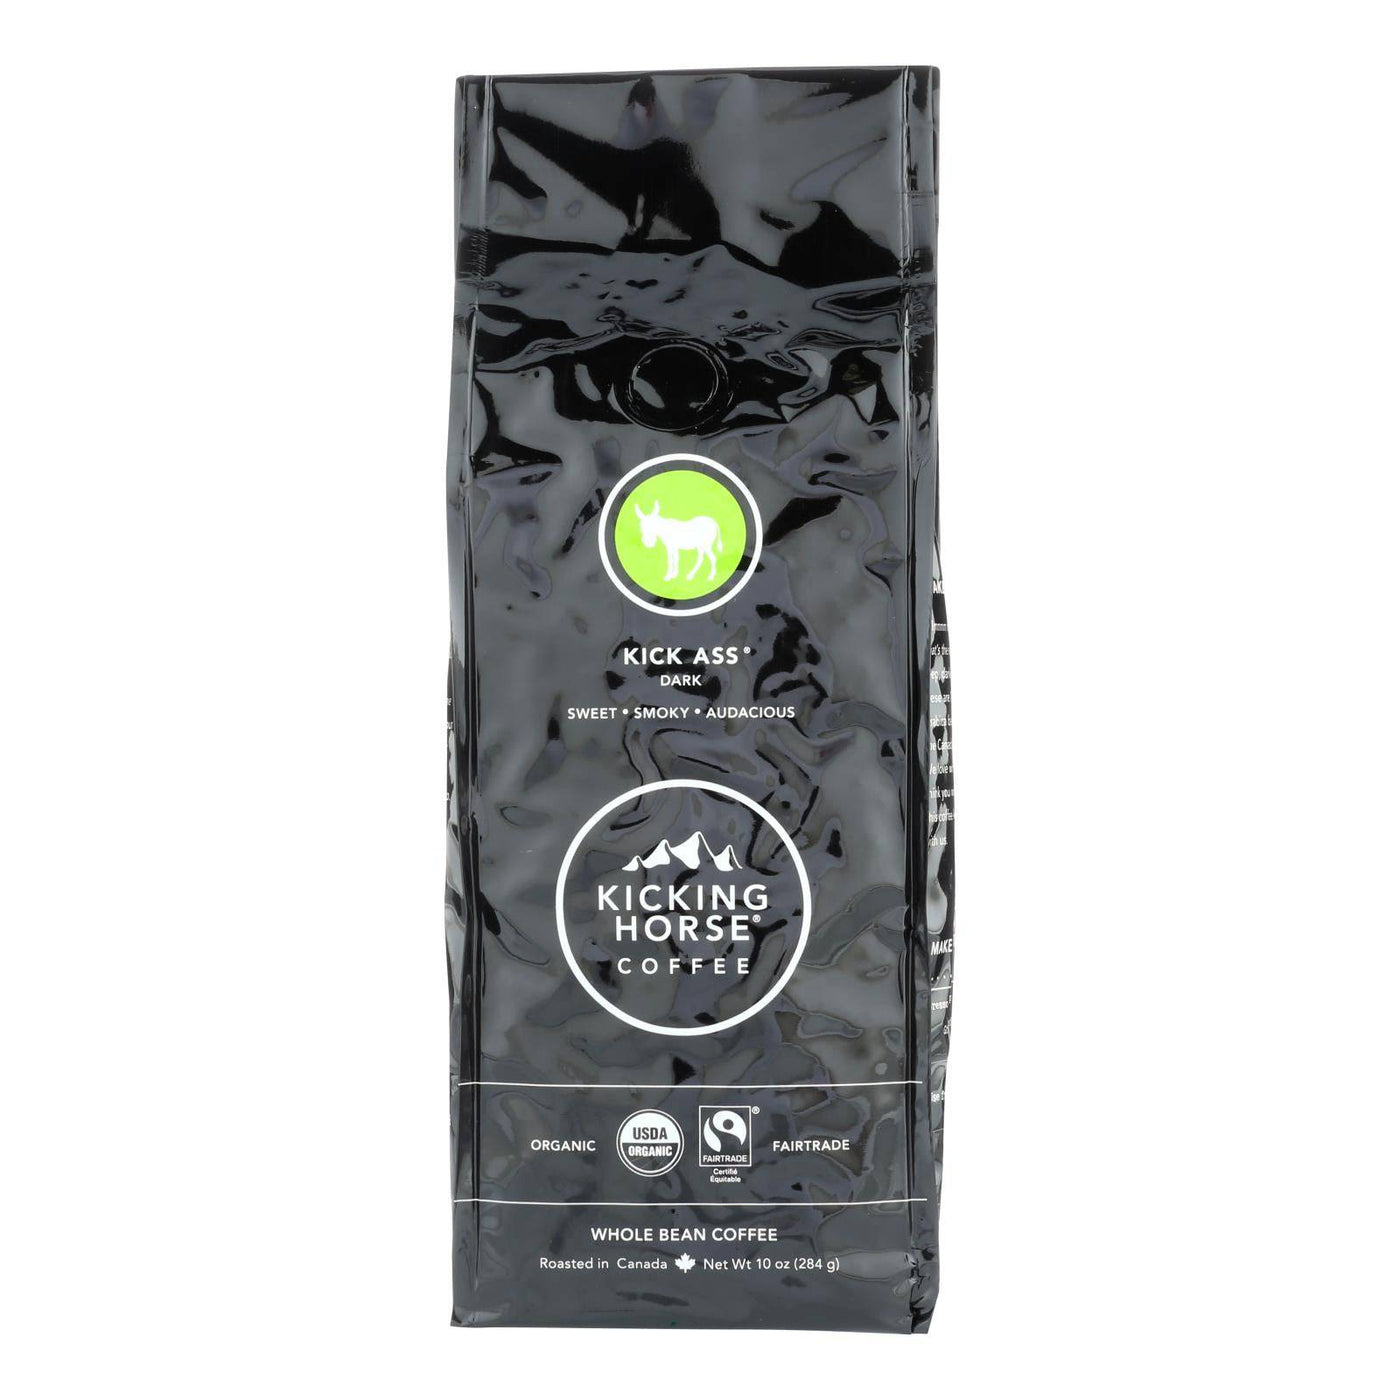 Buy Kicking Horse Coffee - Organic - Whole Bean - Kick Ass - Dark Roast - 10 Oz - Case Of 6  at OnlyNaturals.us